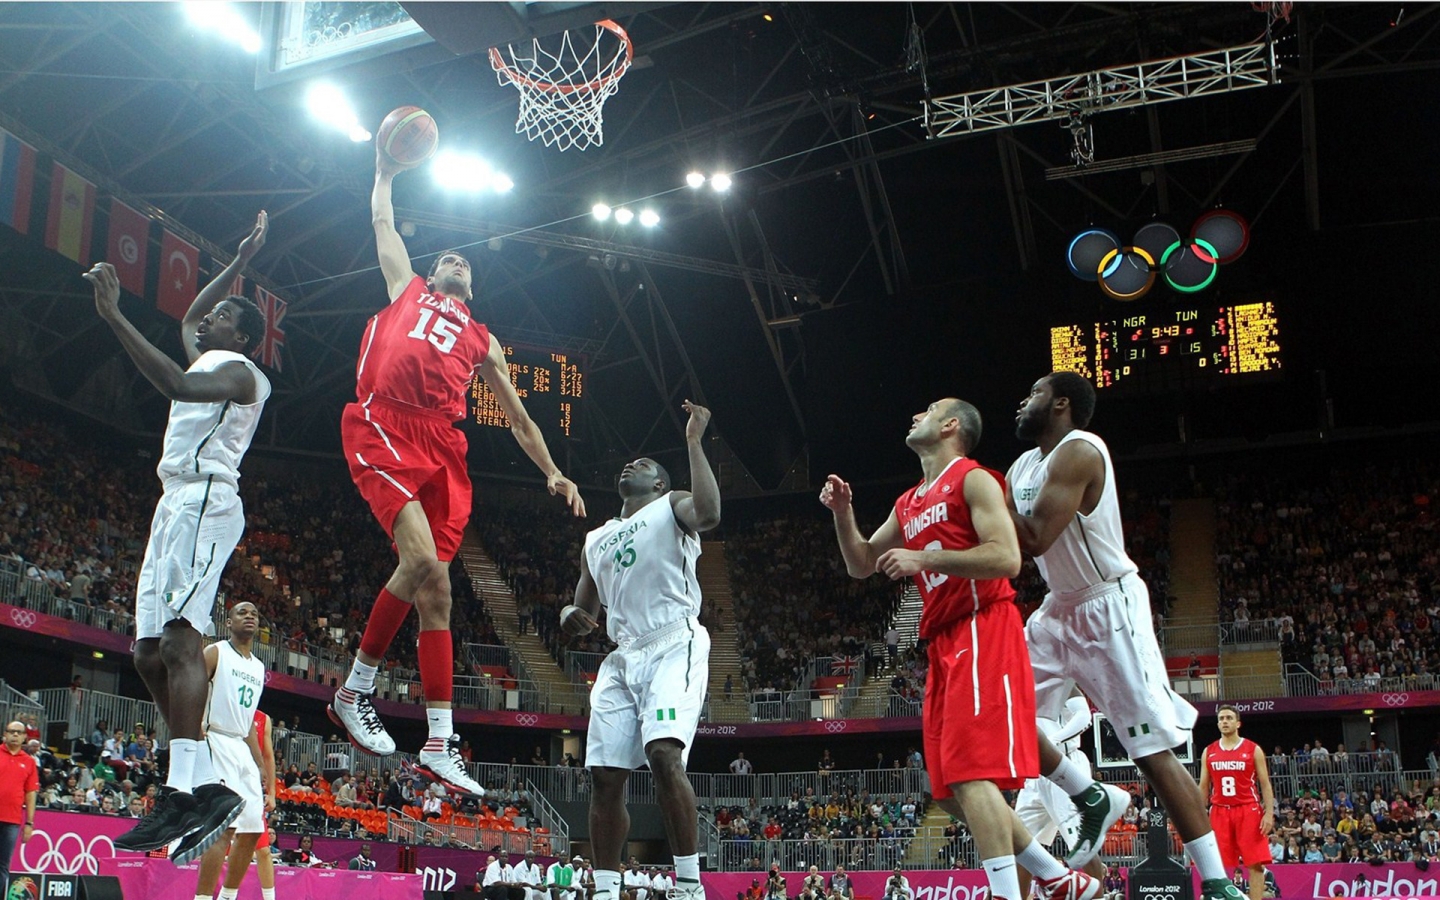 Salah Mejri of Tunisia dunks against Nigeria for 1440 x 900 widescreen resolution